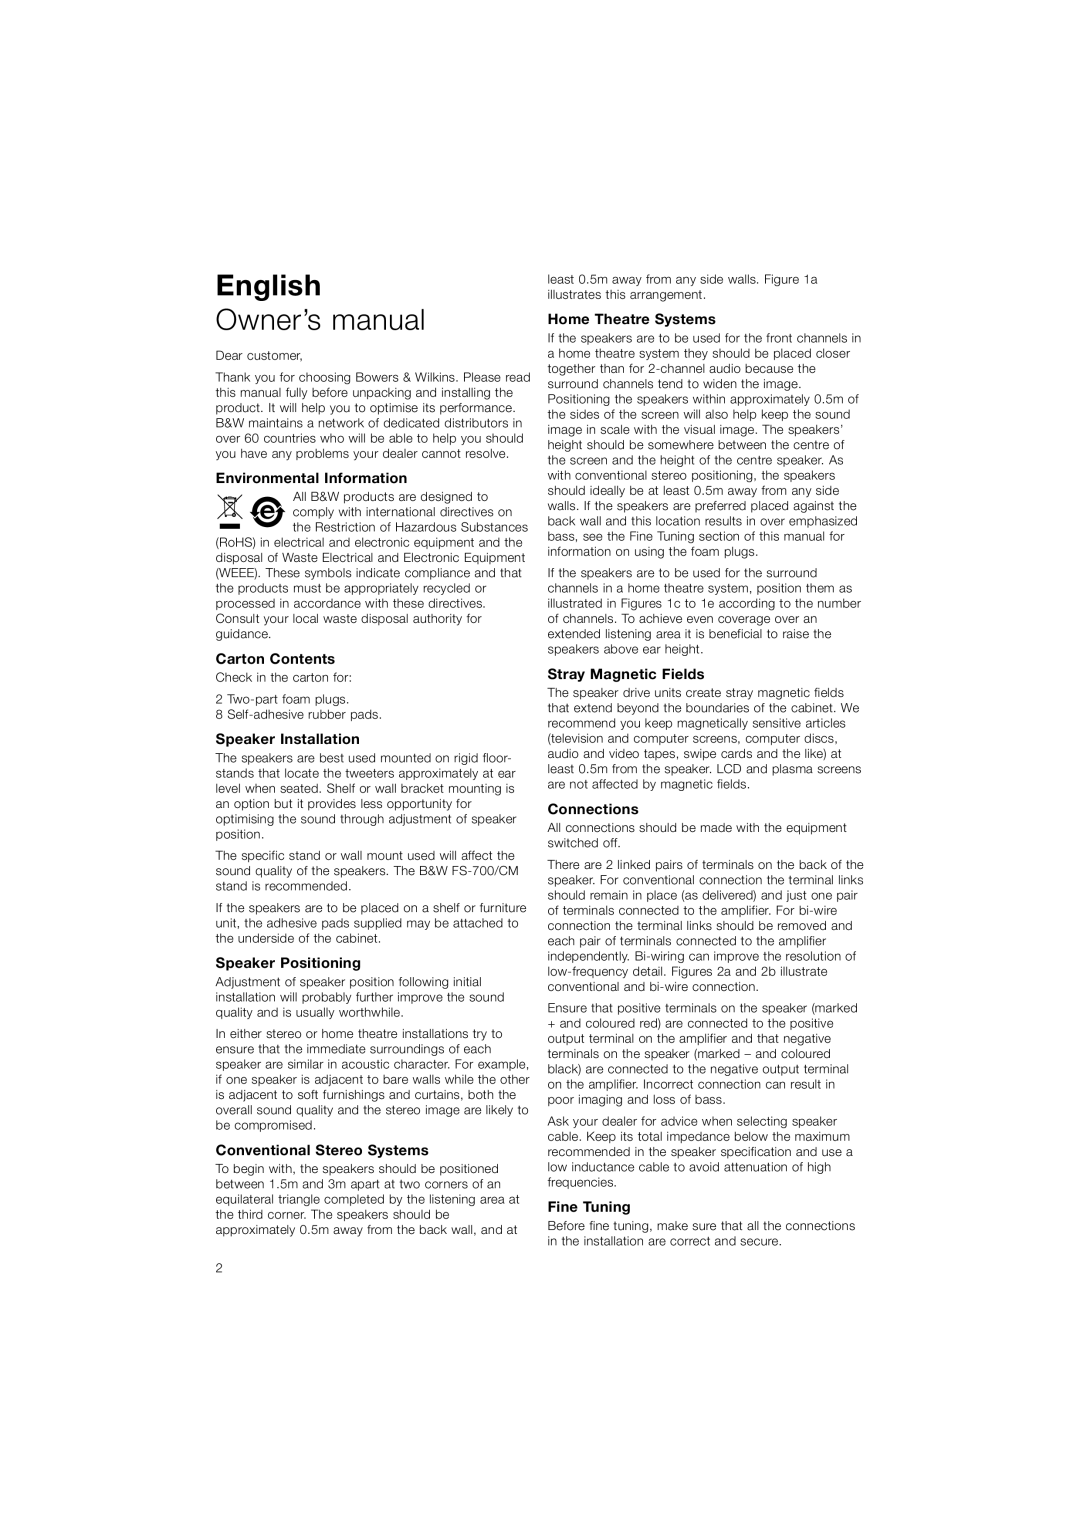 Bowers & Wilkins CM5 English, Environmental Information, Carton Contents, Speaker Installation, Speaker Positioning 